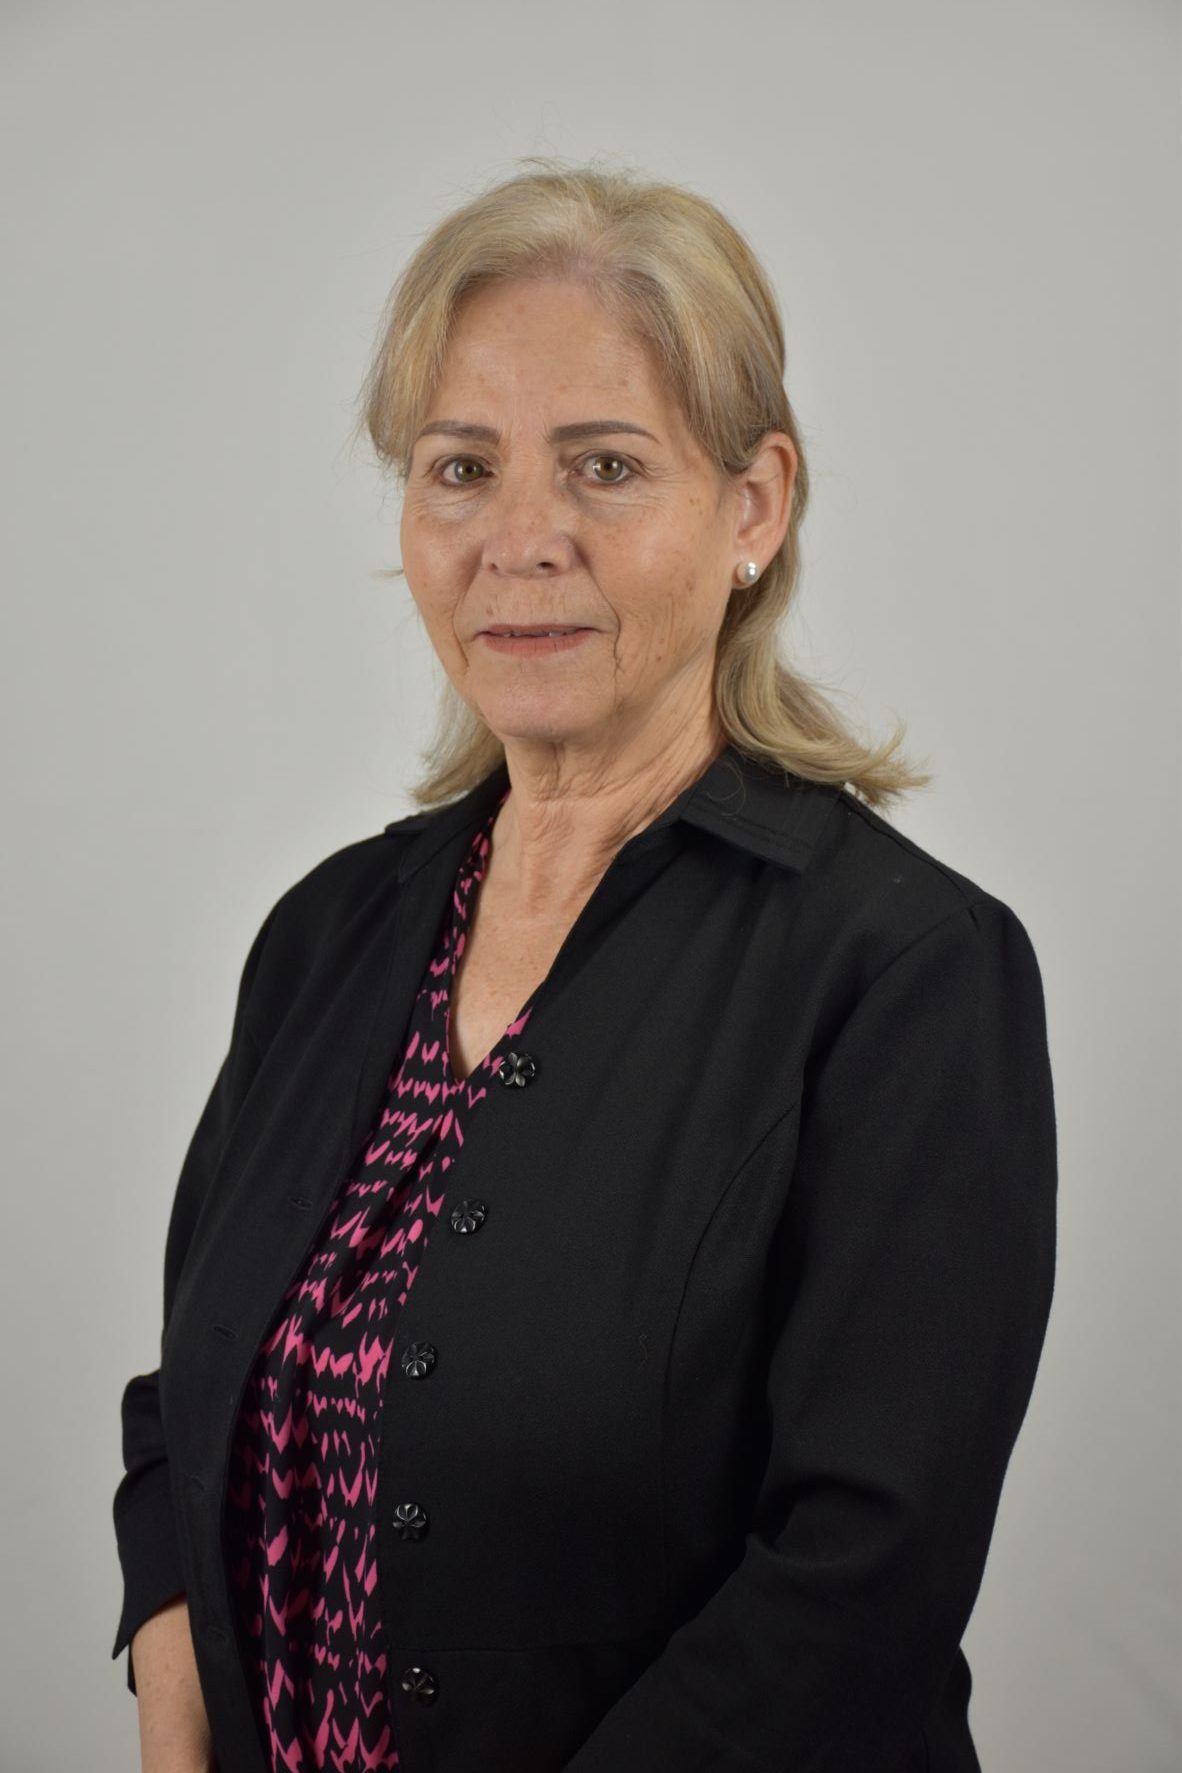 Carmen Lavarreda, Fort Worth Case Manager for Special Programs